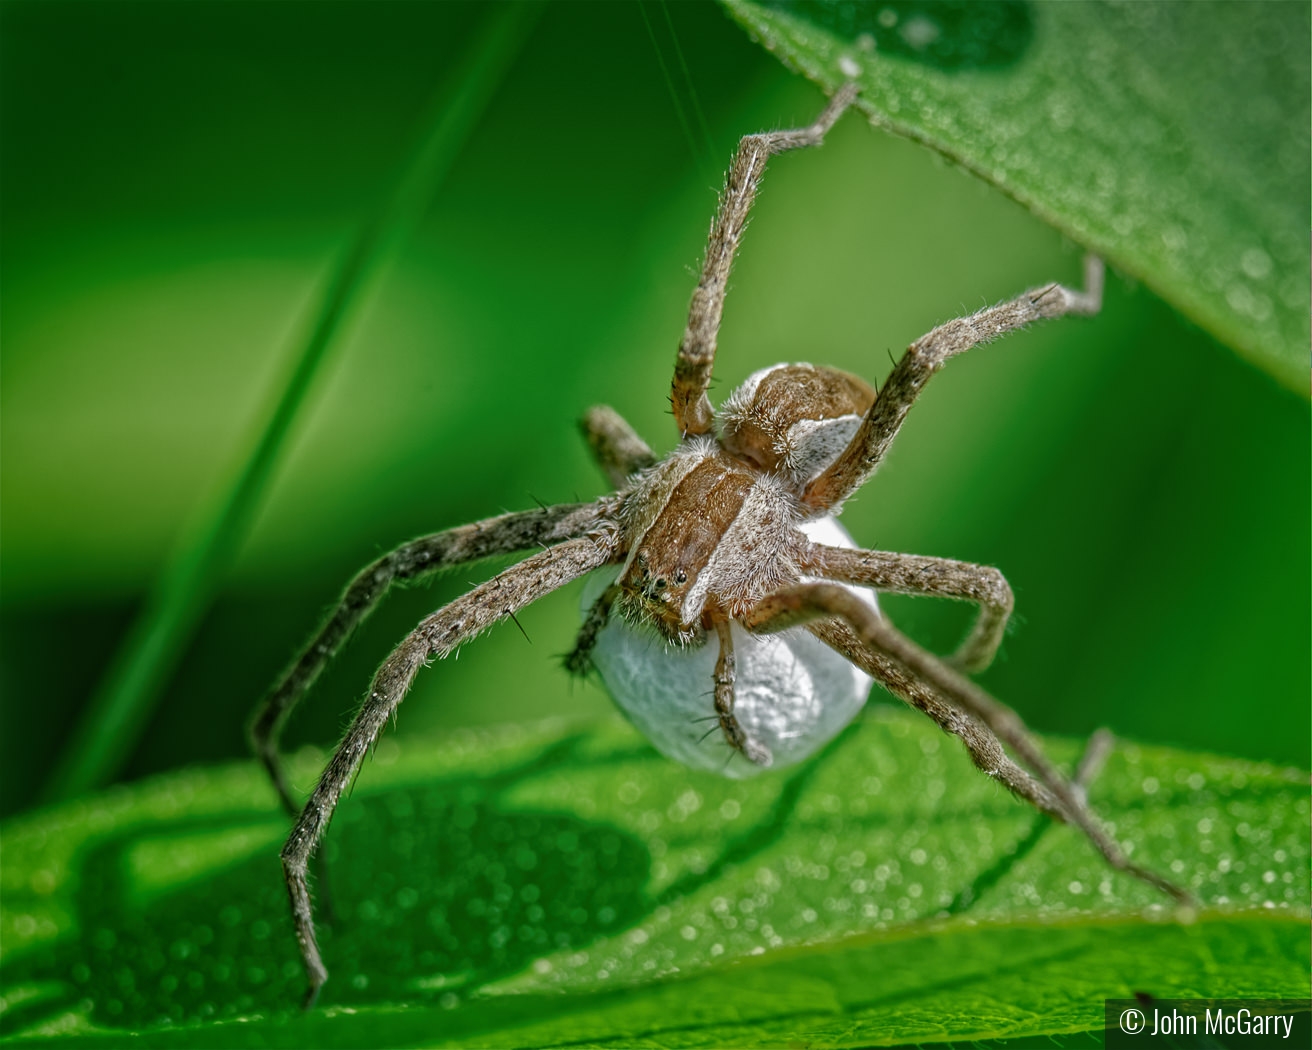 Nursery Web Spider with Egg Sac by John McGarry